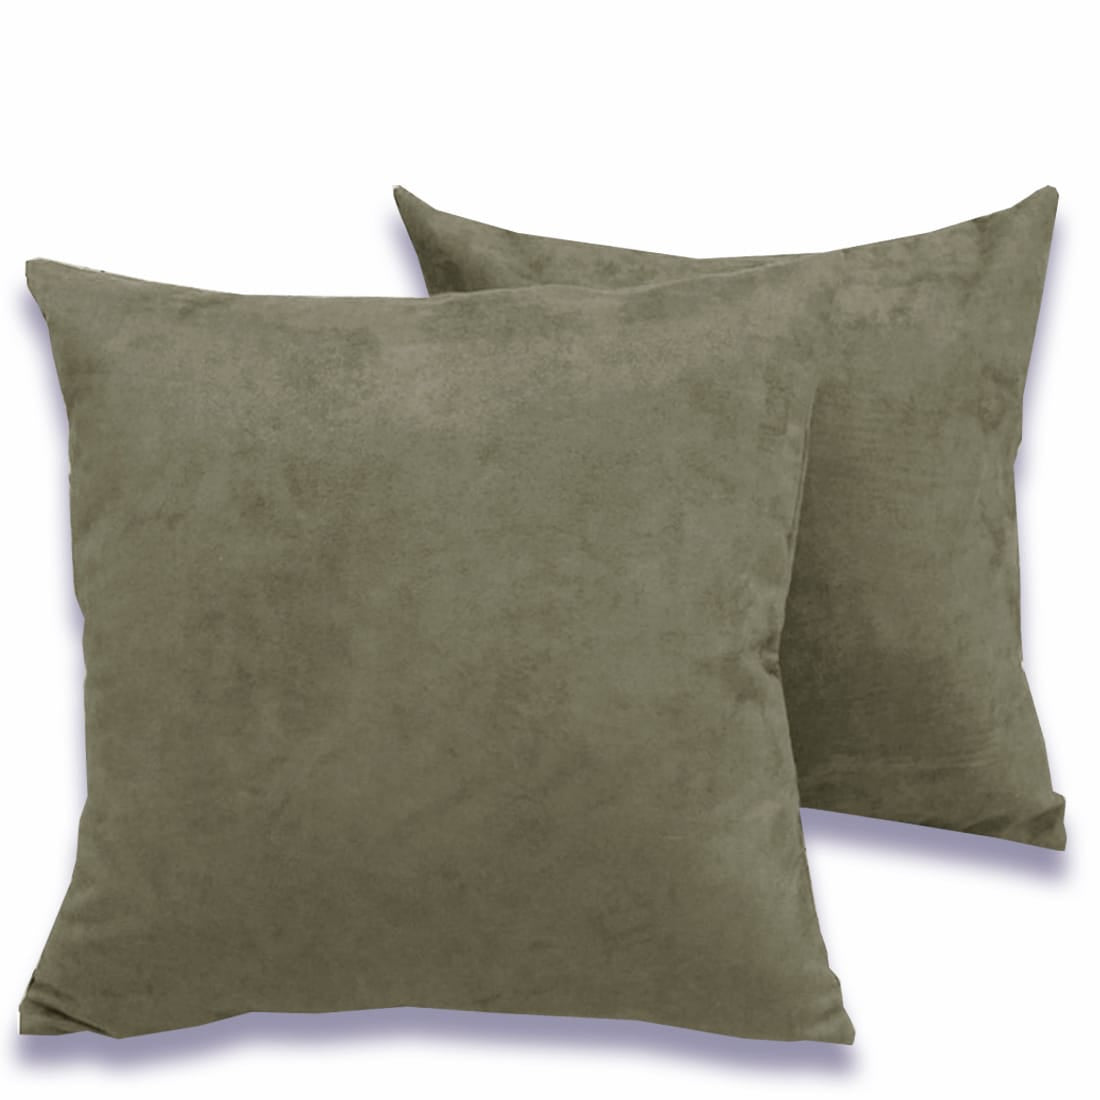 Luxurious Microfiber Suede Velvet Cushion Cover Set in Khaki online in India